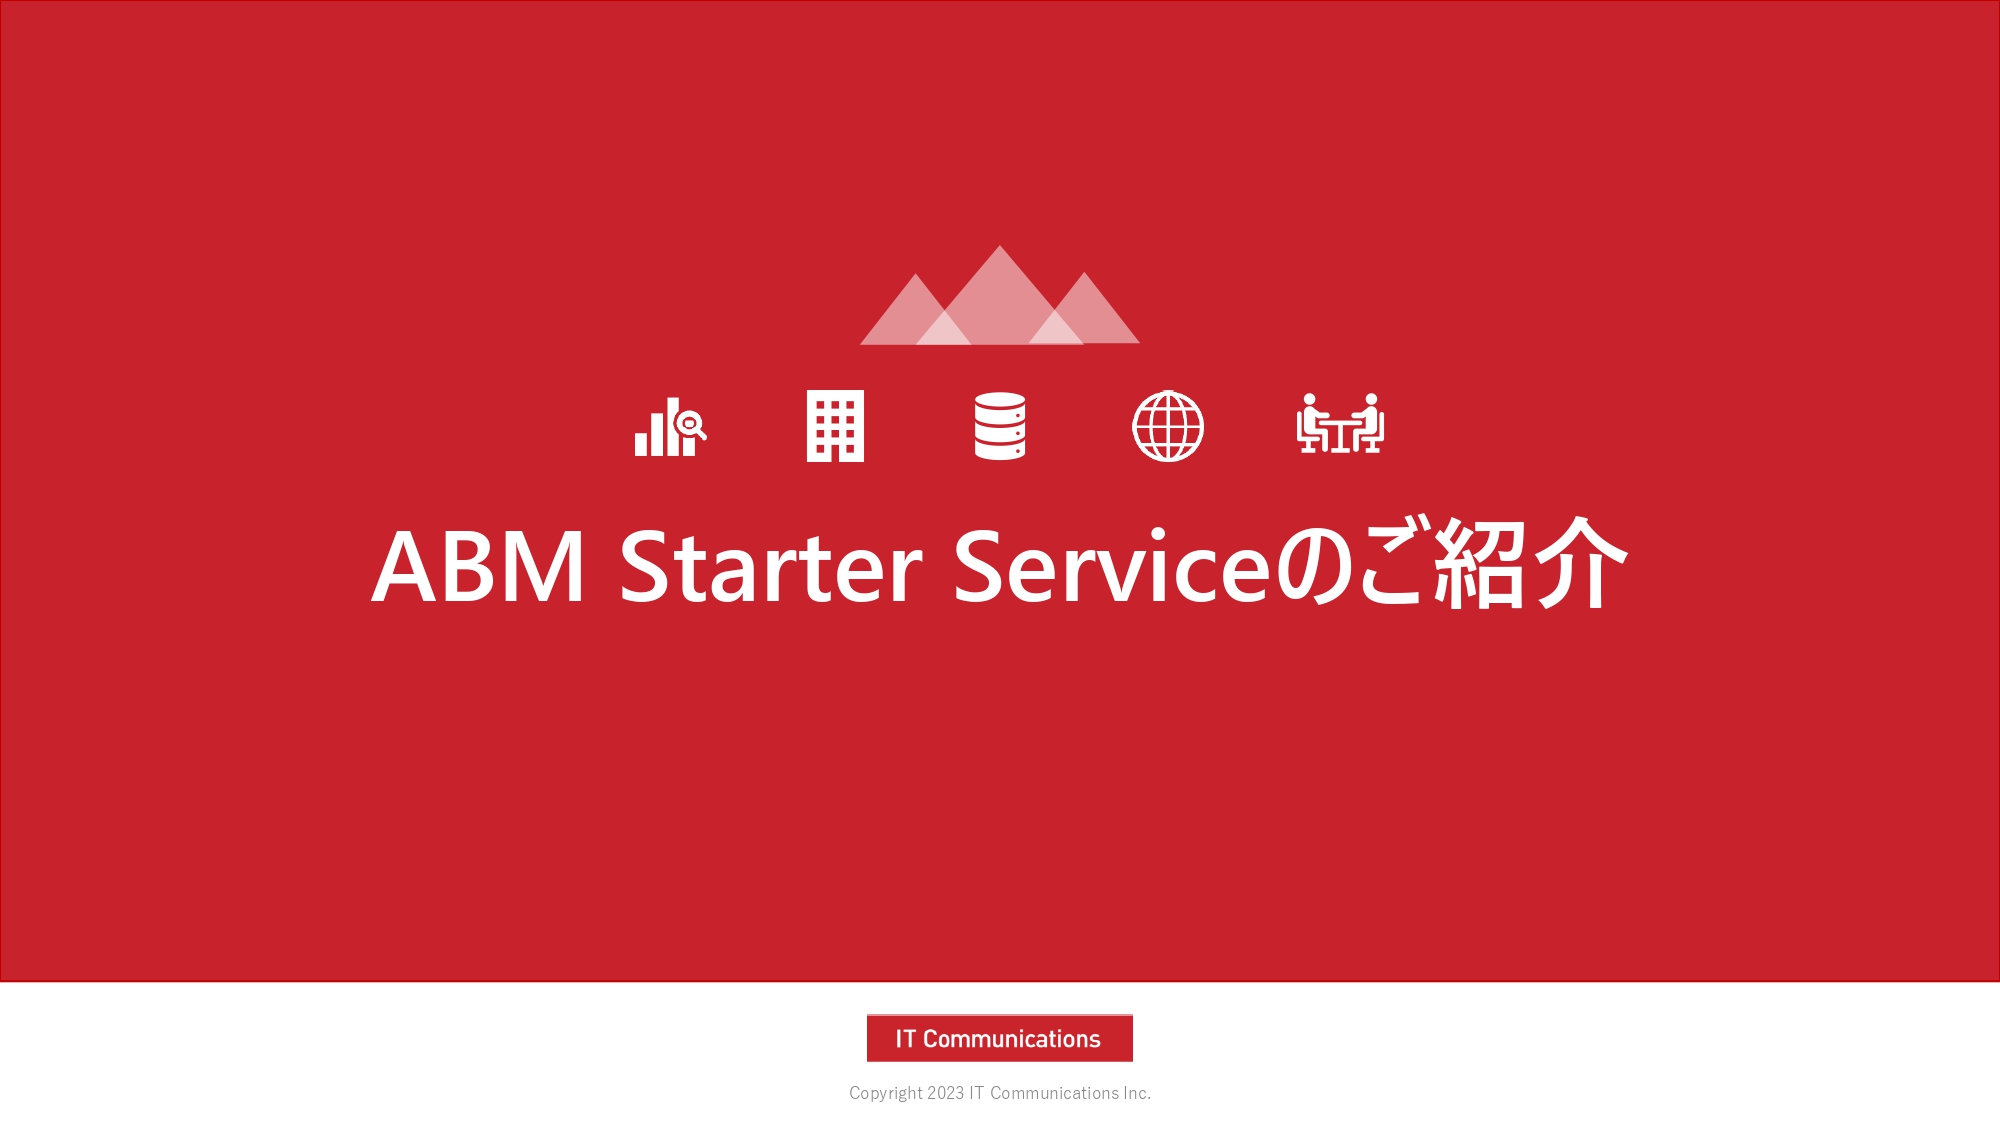 ABM Starter Service_short version_page-0001